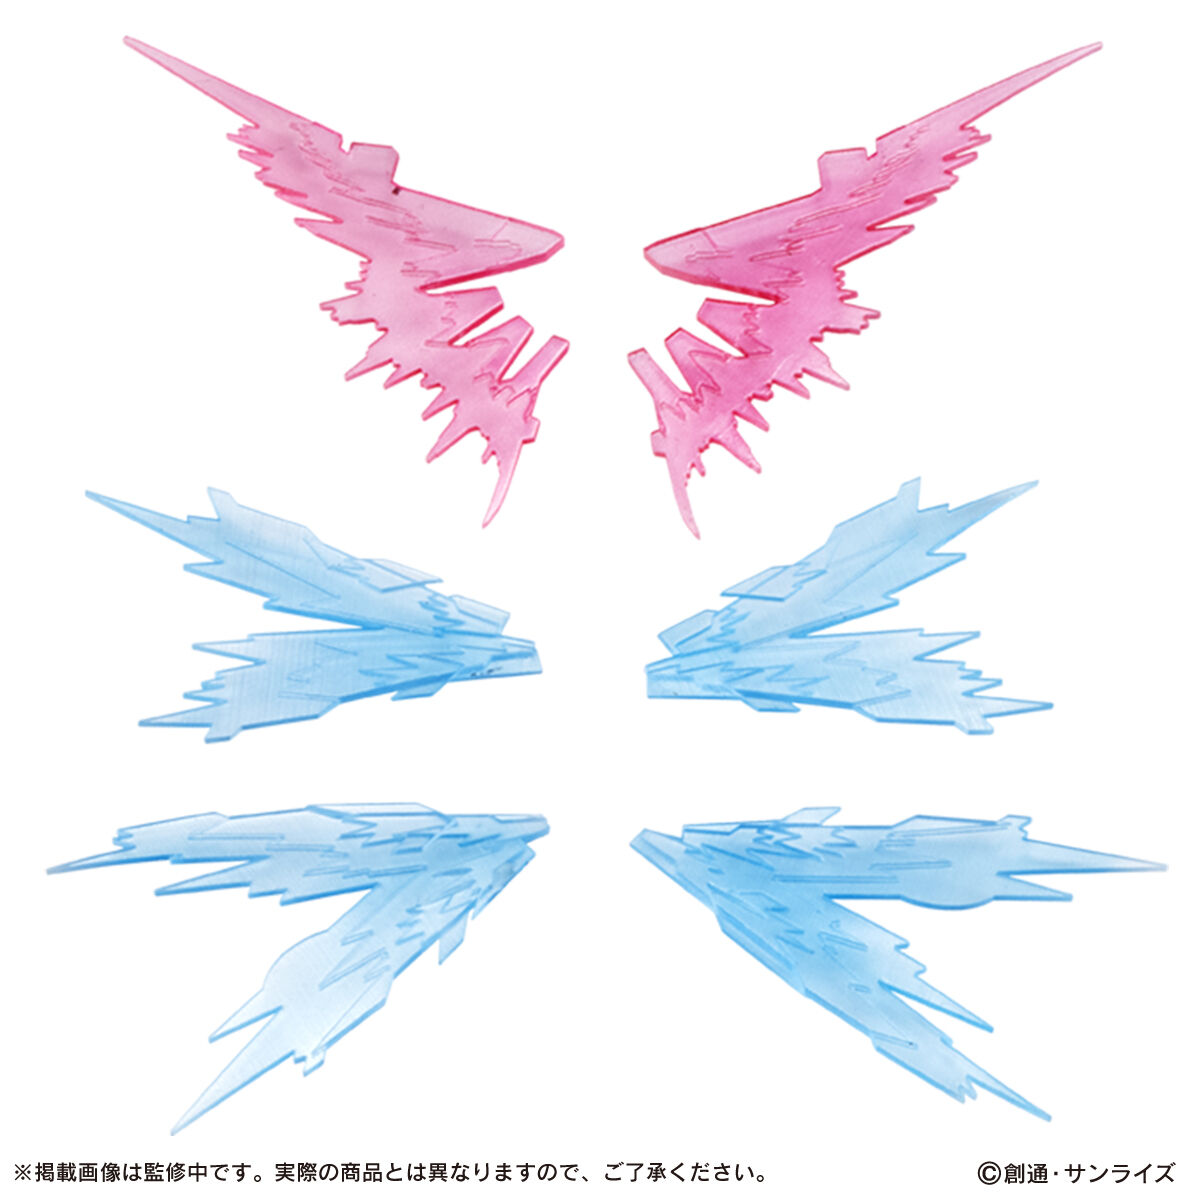 Gashapon Gundam Series: Gundam Mobile Suit Ensemble Expansion Parts Wing of Light for ZGMF-X42S Destiny Gundam + ZGMF-X20A Strike Freedom Gundam